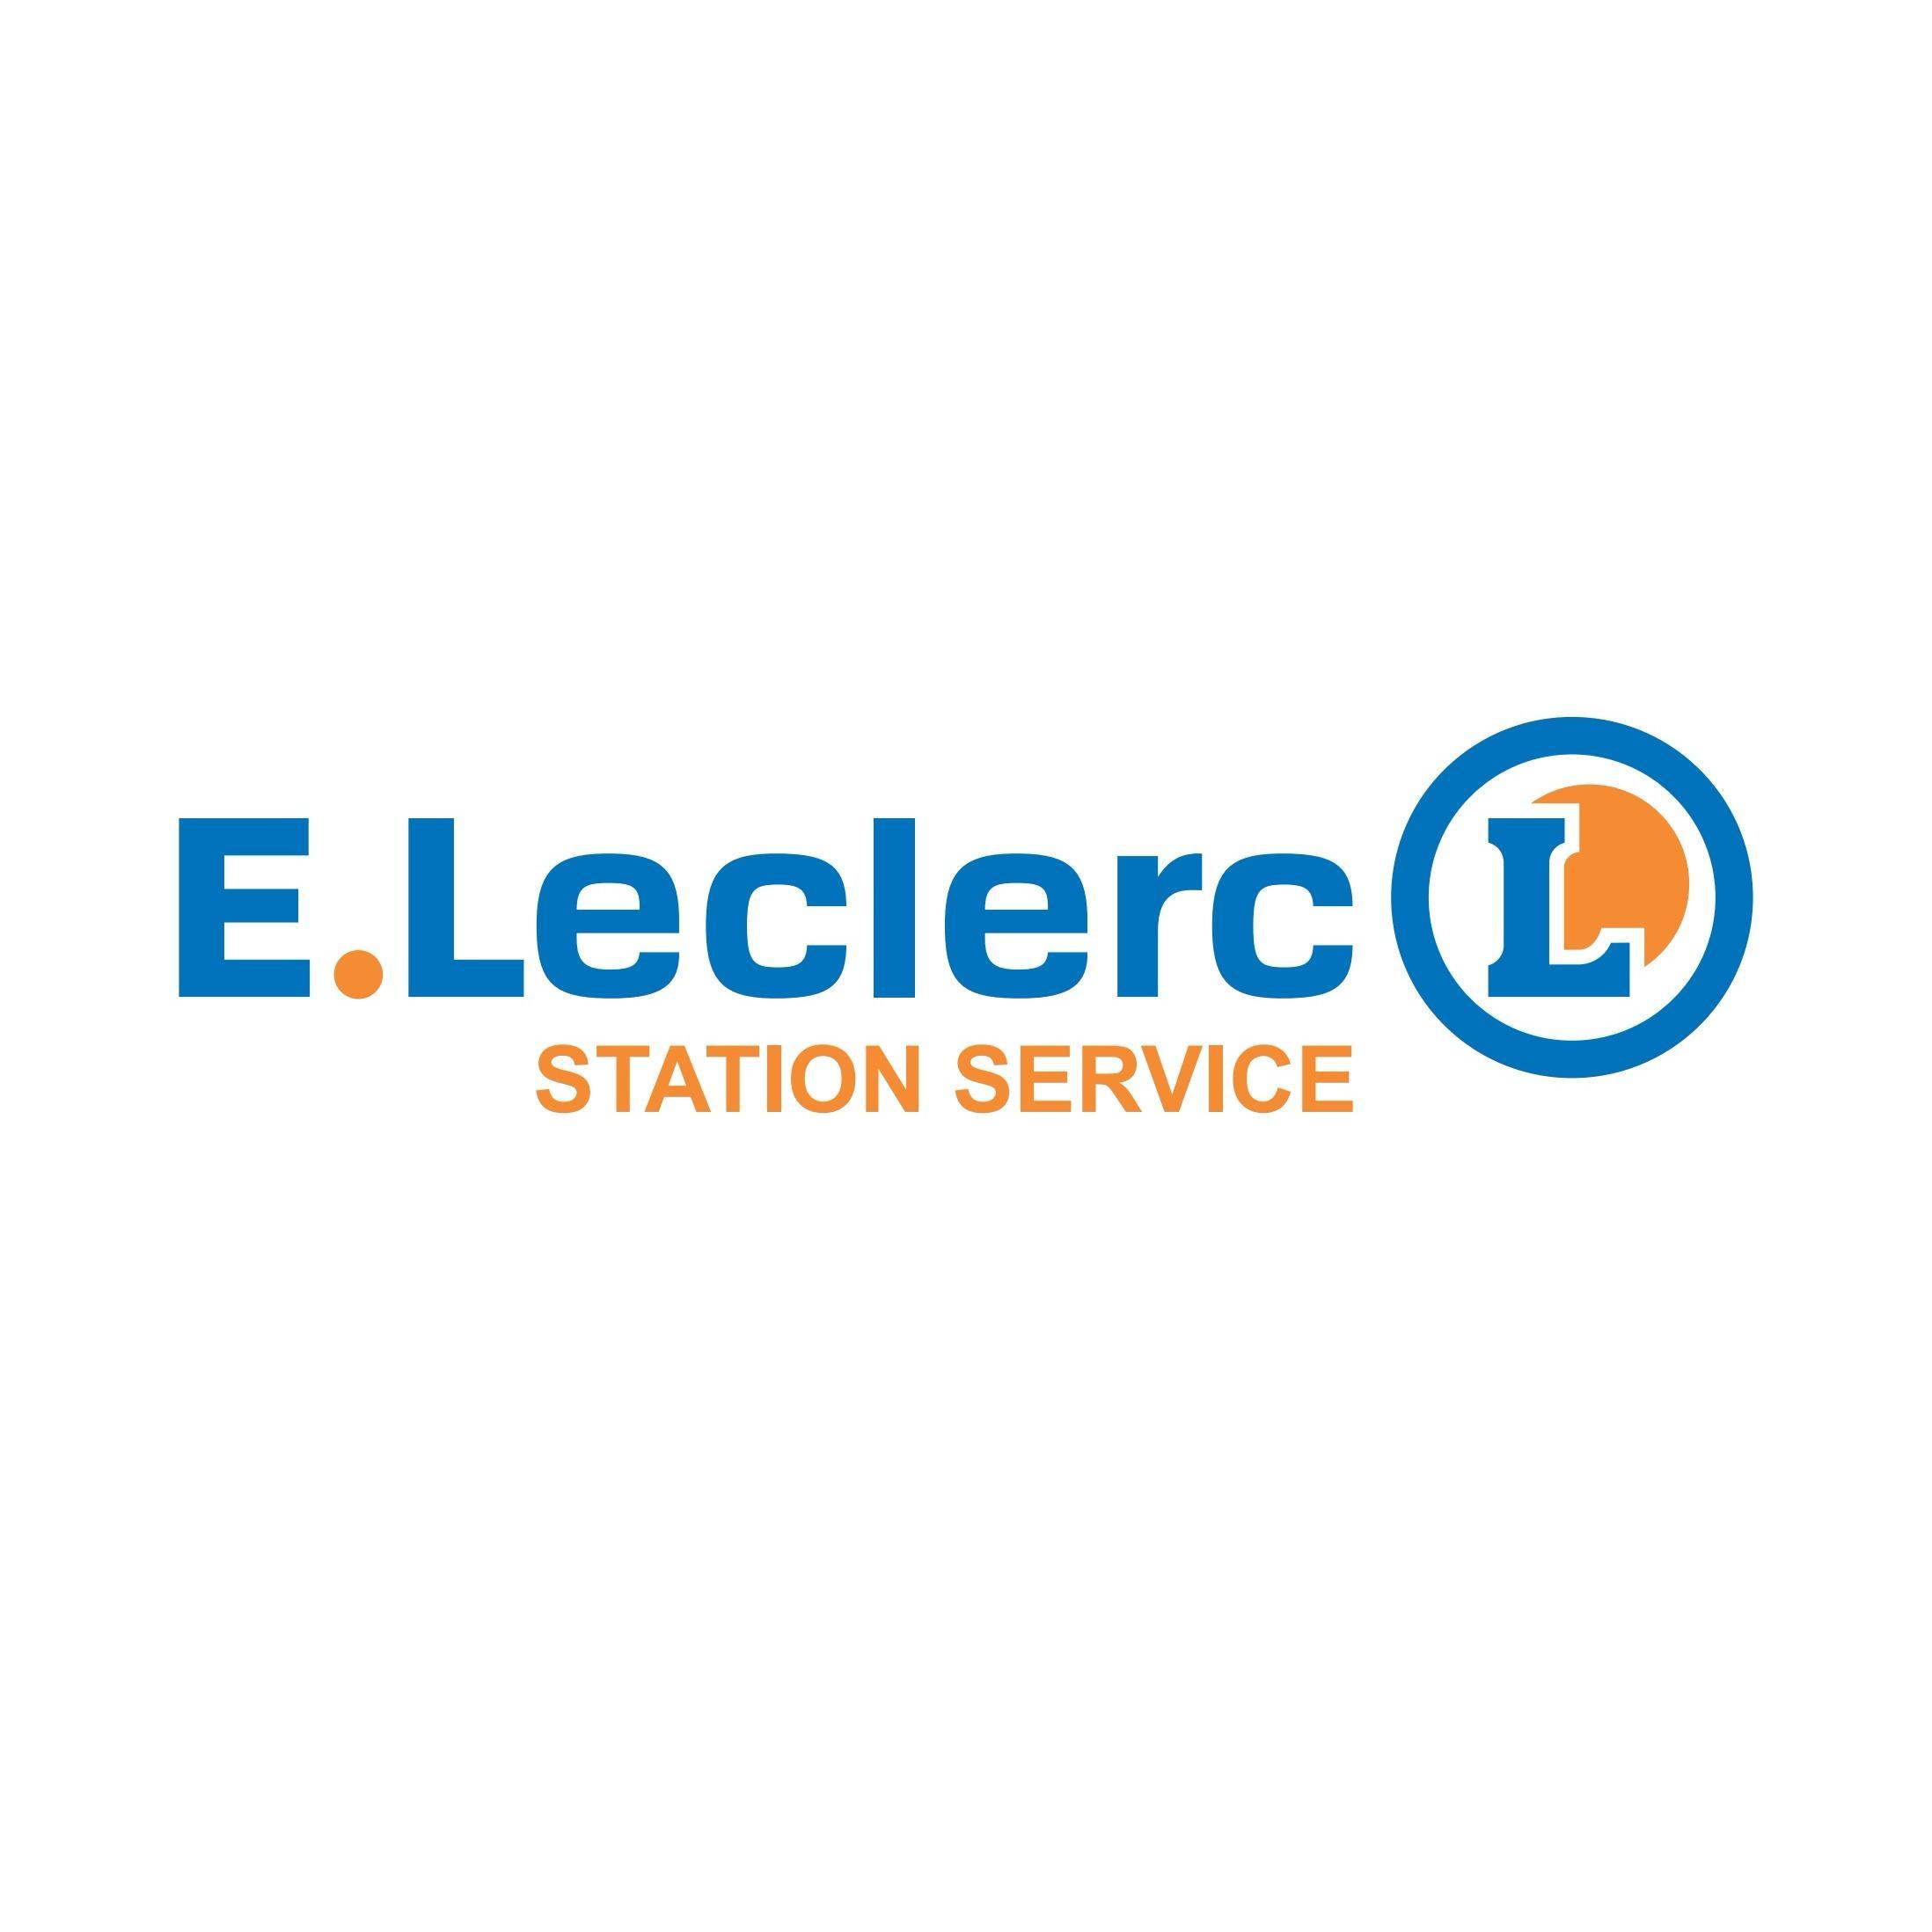 E.leclerc Station Service Caen